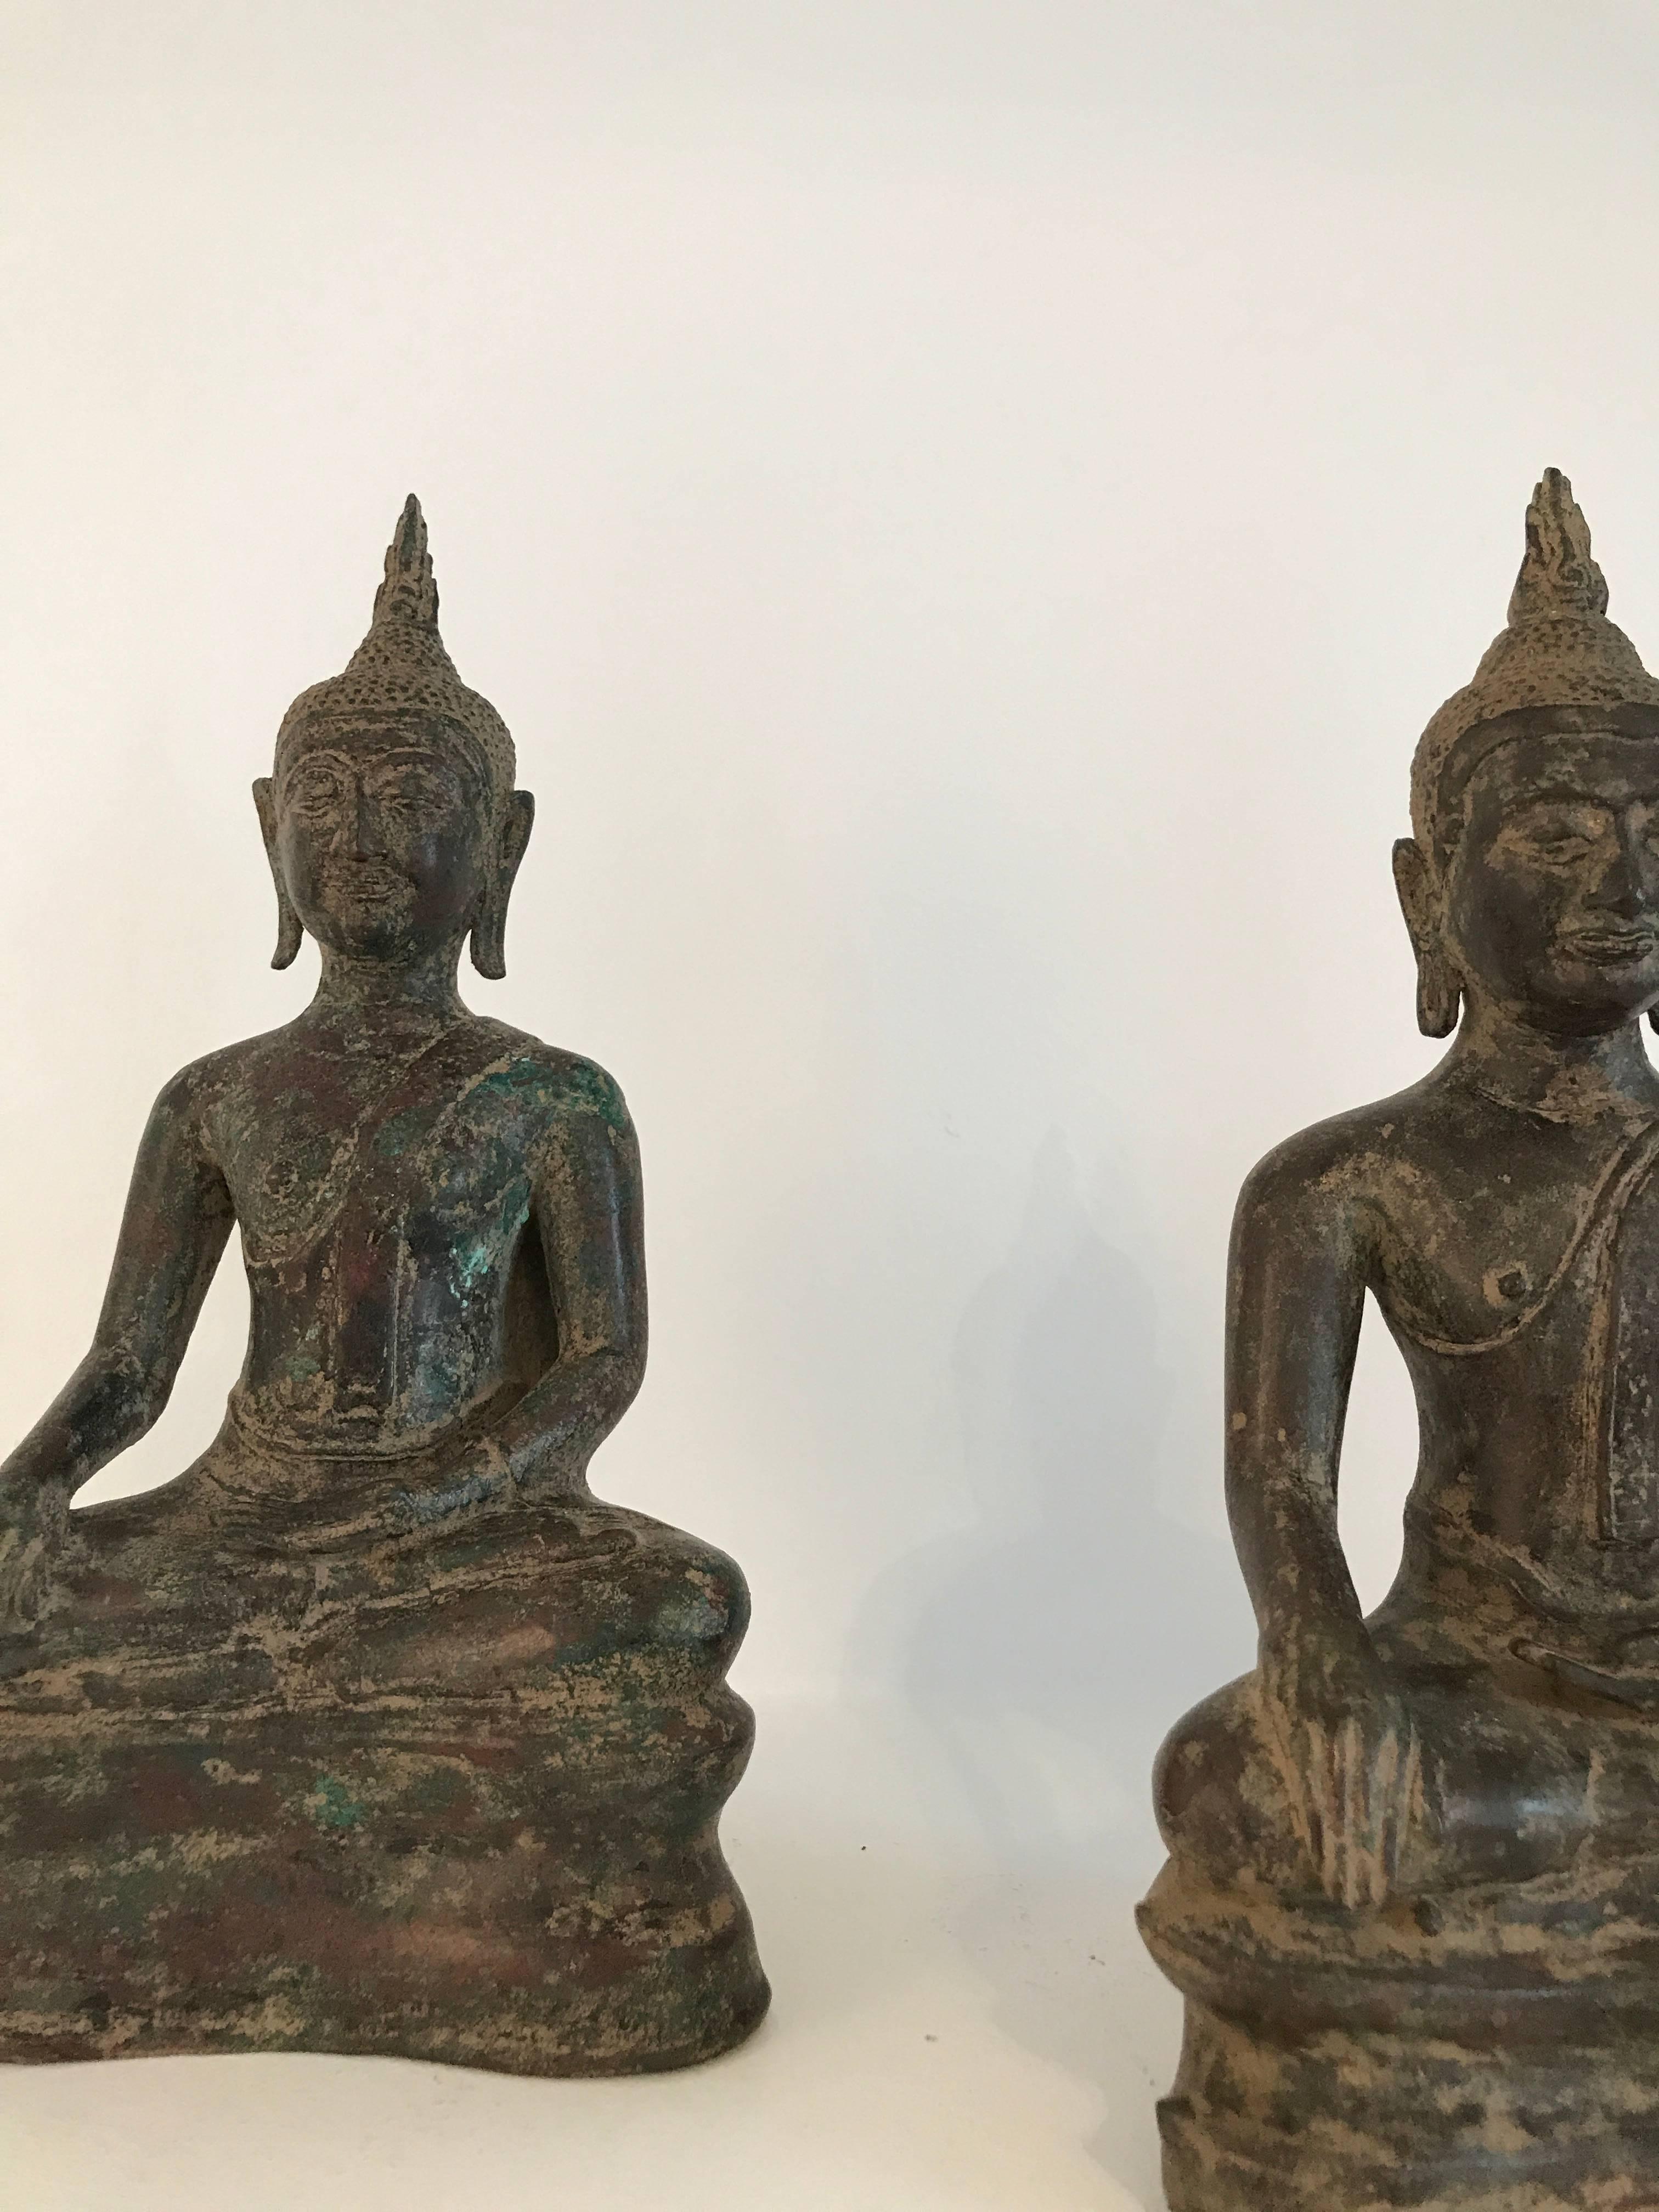 Two bronze Buddhas, Ayutthaya, 16th century, Thailand
with great patina
dimensions
26 cm X 13 cm X 8 cm
24 cm X 14 cm X 8 cm.